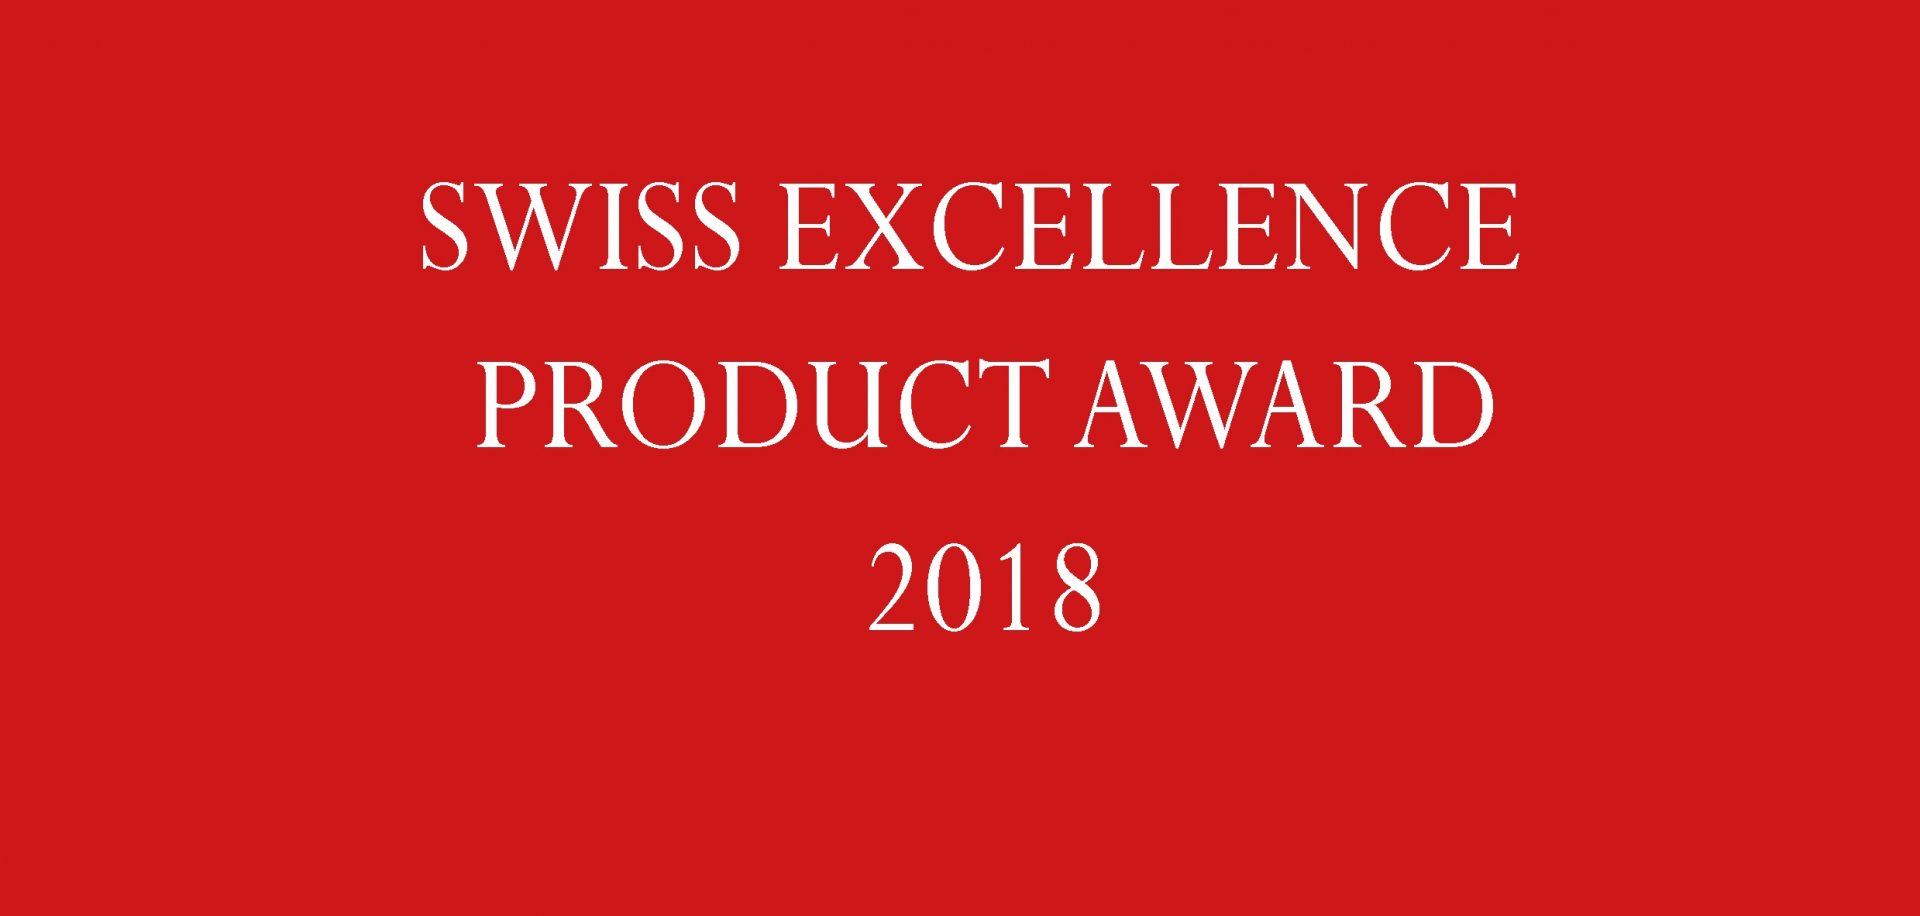 Jetzt bewerben: Swiss Excellence Product Award